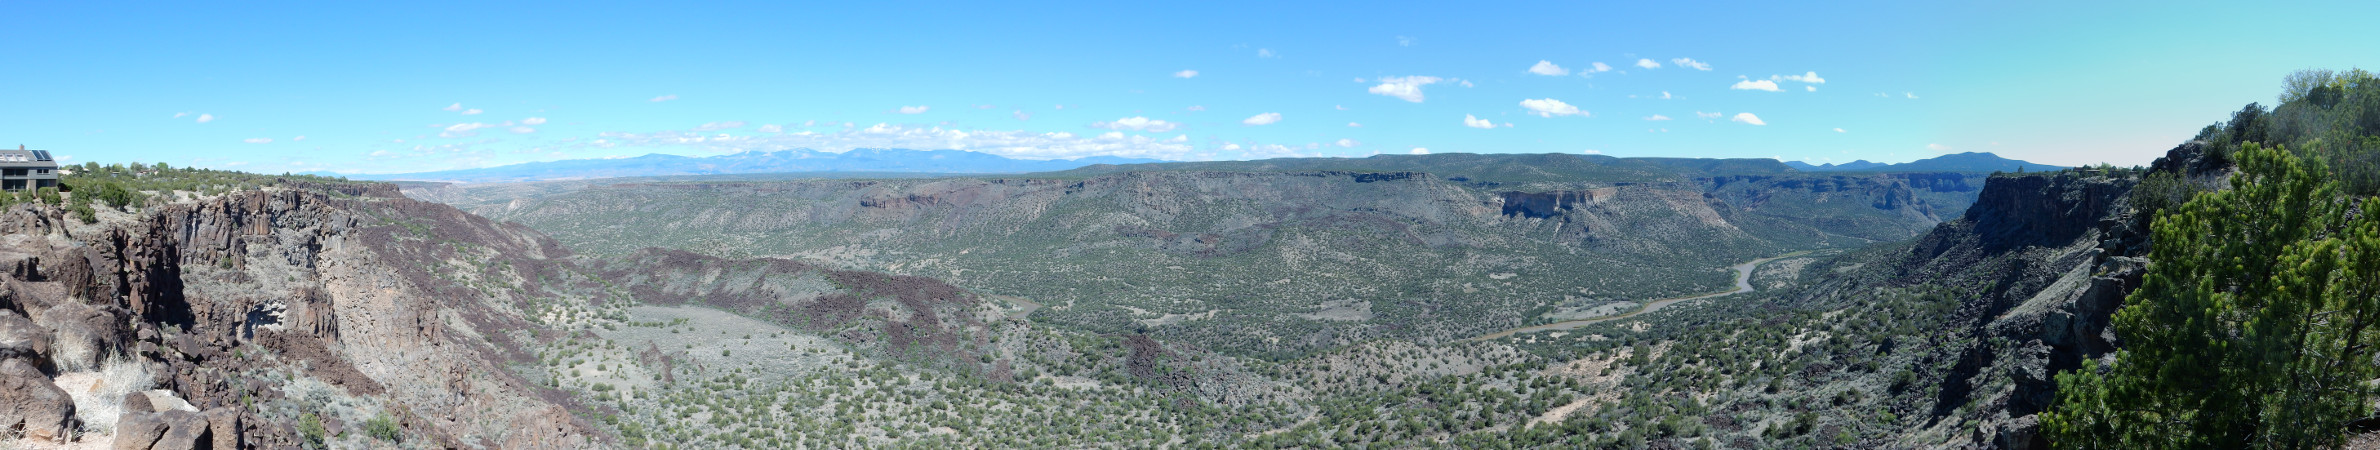 Panorama of
              White Rock Canyon